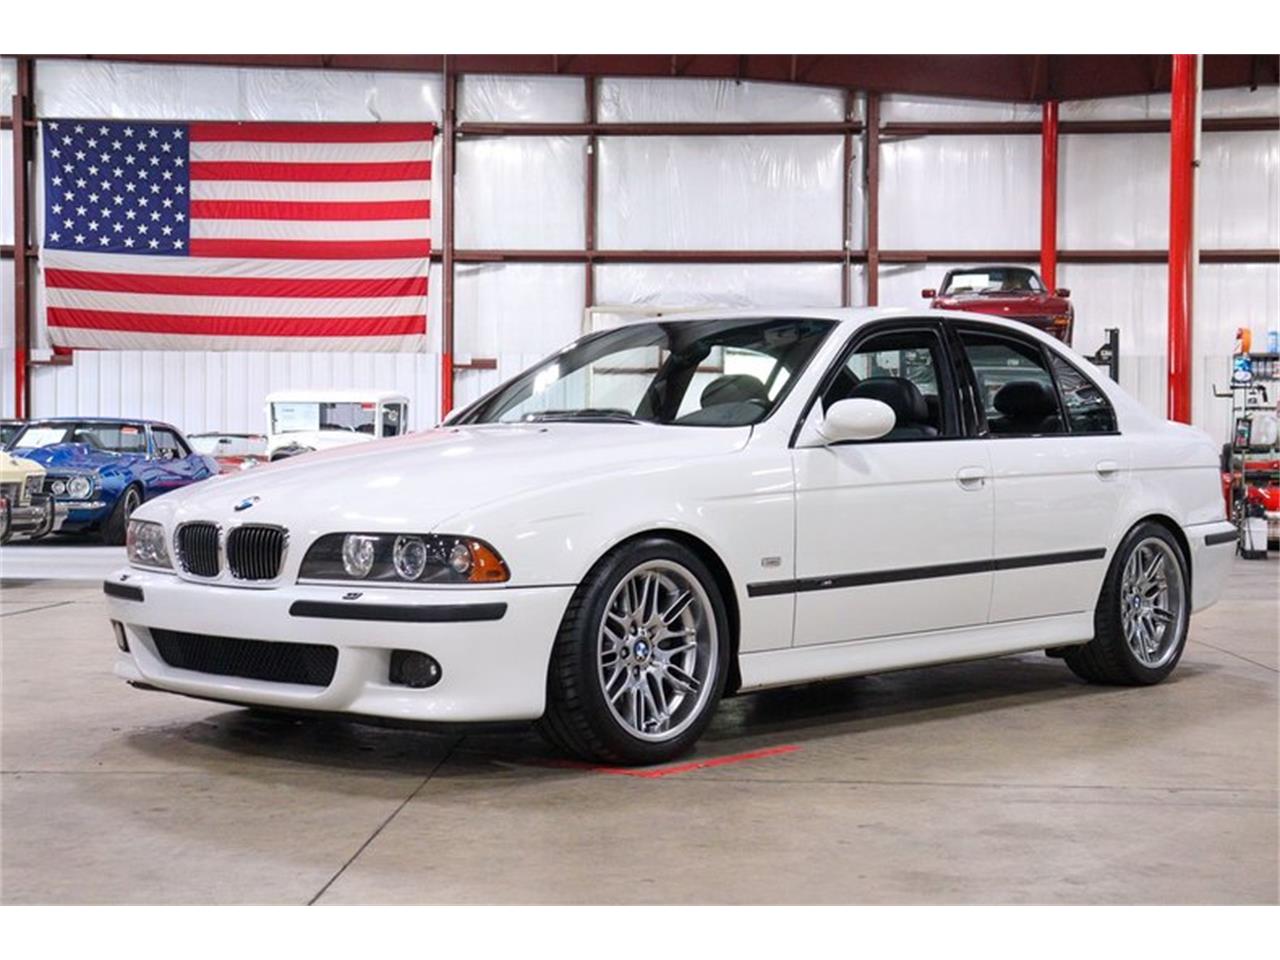 For Sale: 2002 BMW M5 in Ken2od, Michigan for sale in Grand Rapids, MI